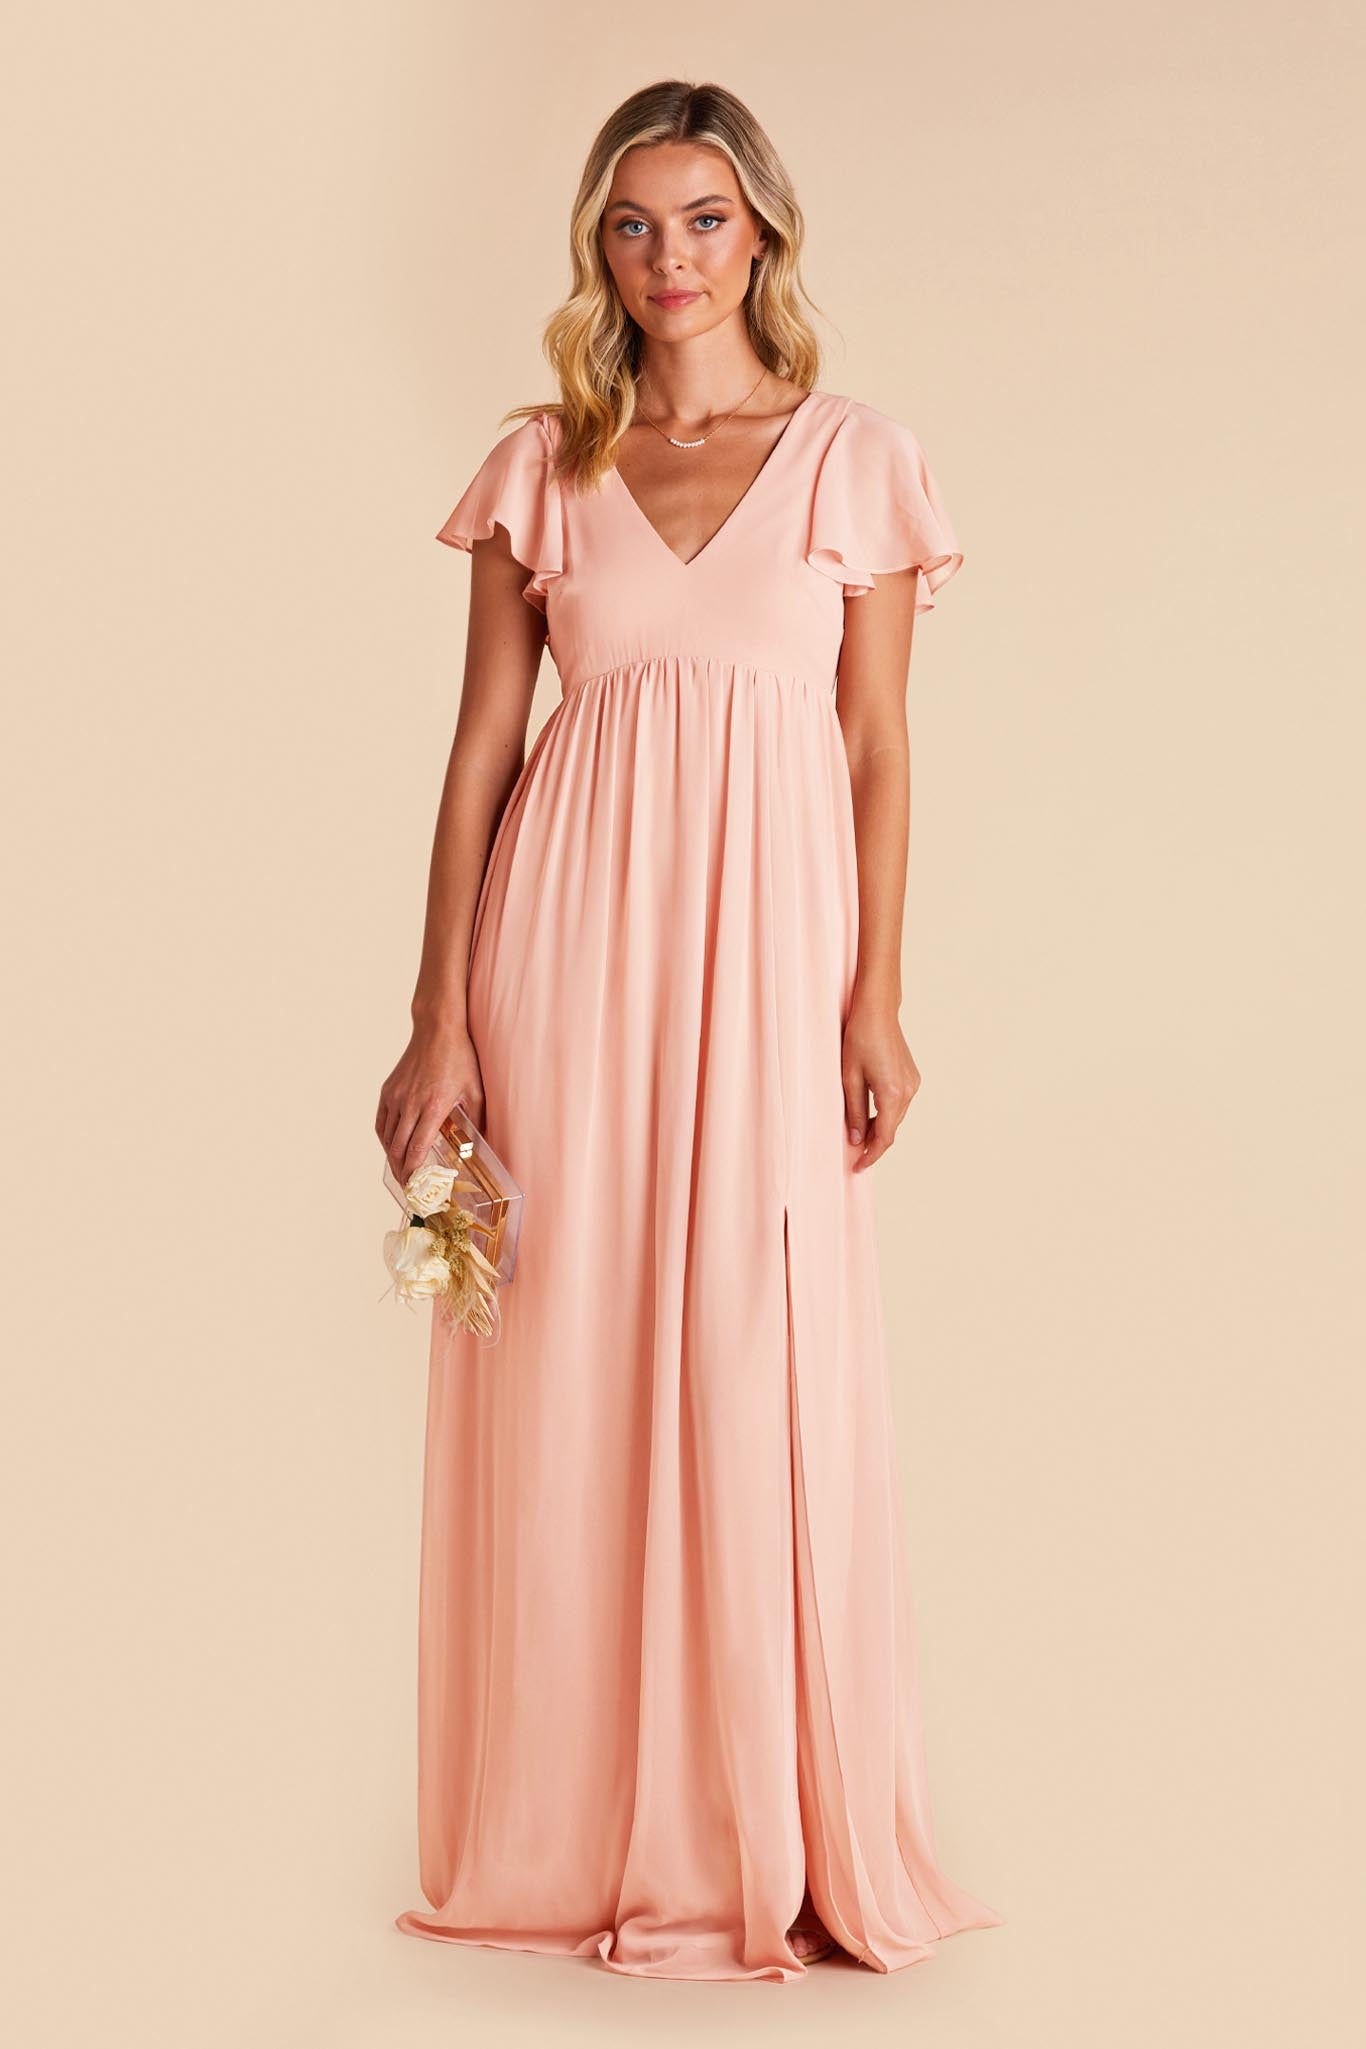 Blush Pink Hannah Empire Dress by Birdy Grey